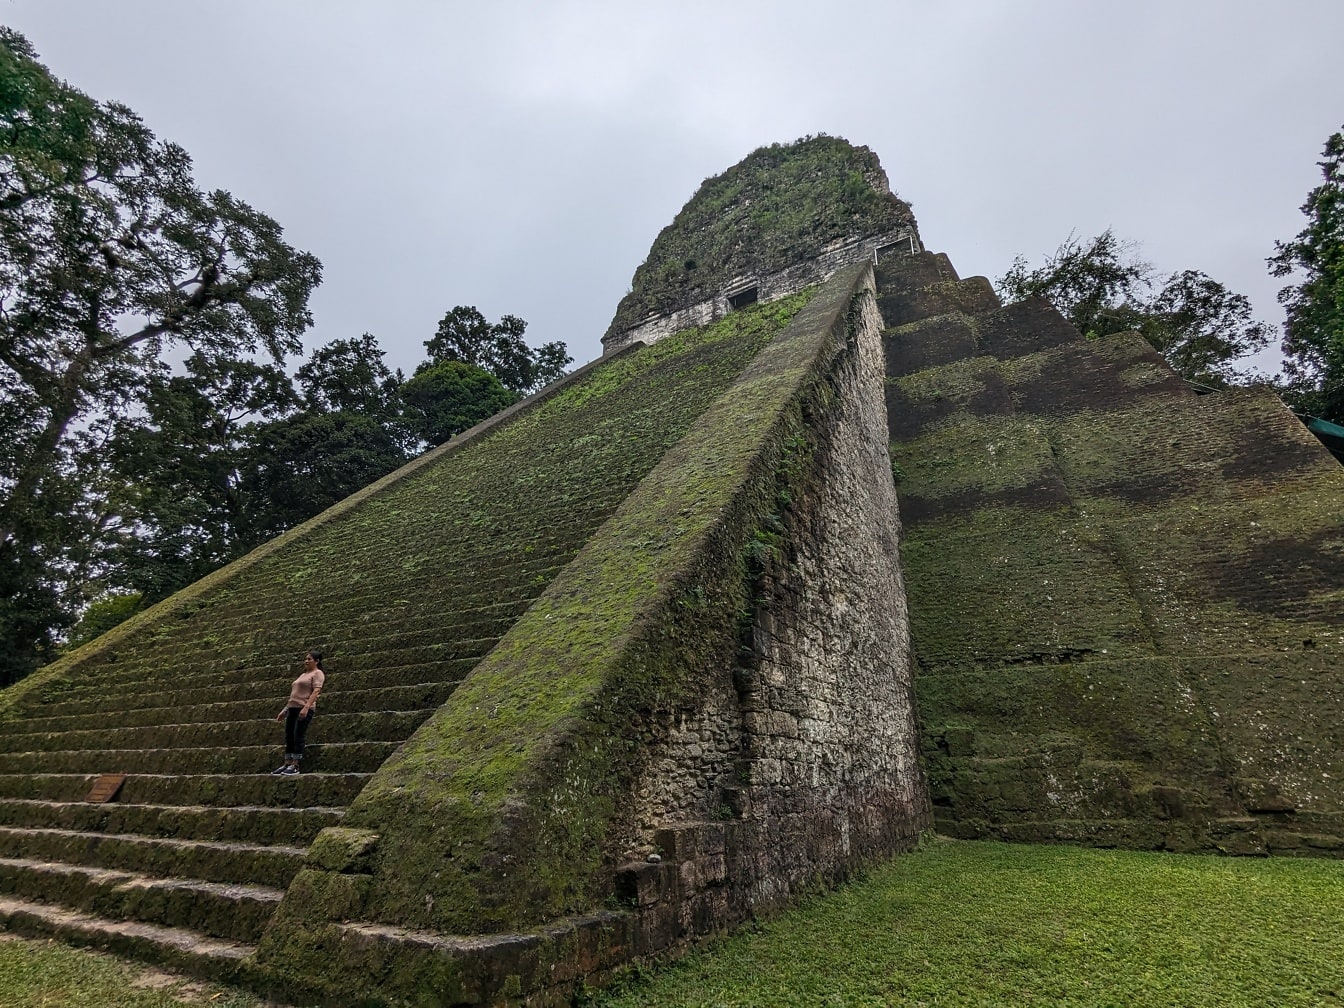 Guatemala’daki Tikal tapınağı V piramidinin taş merdiveninde duran kişi